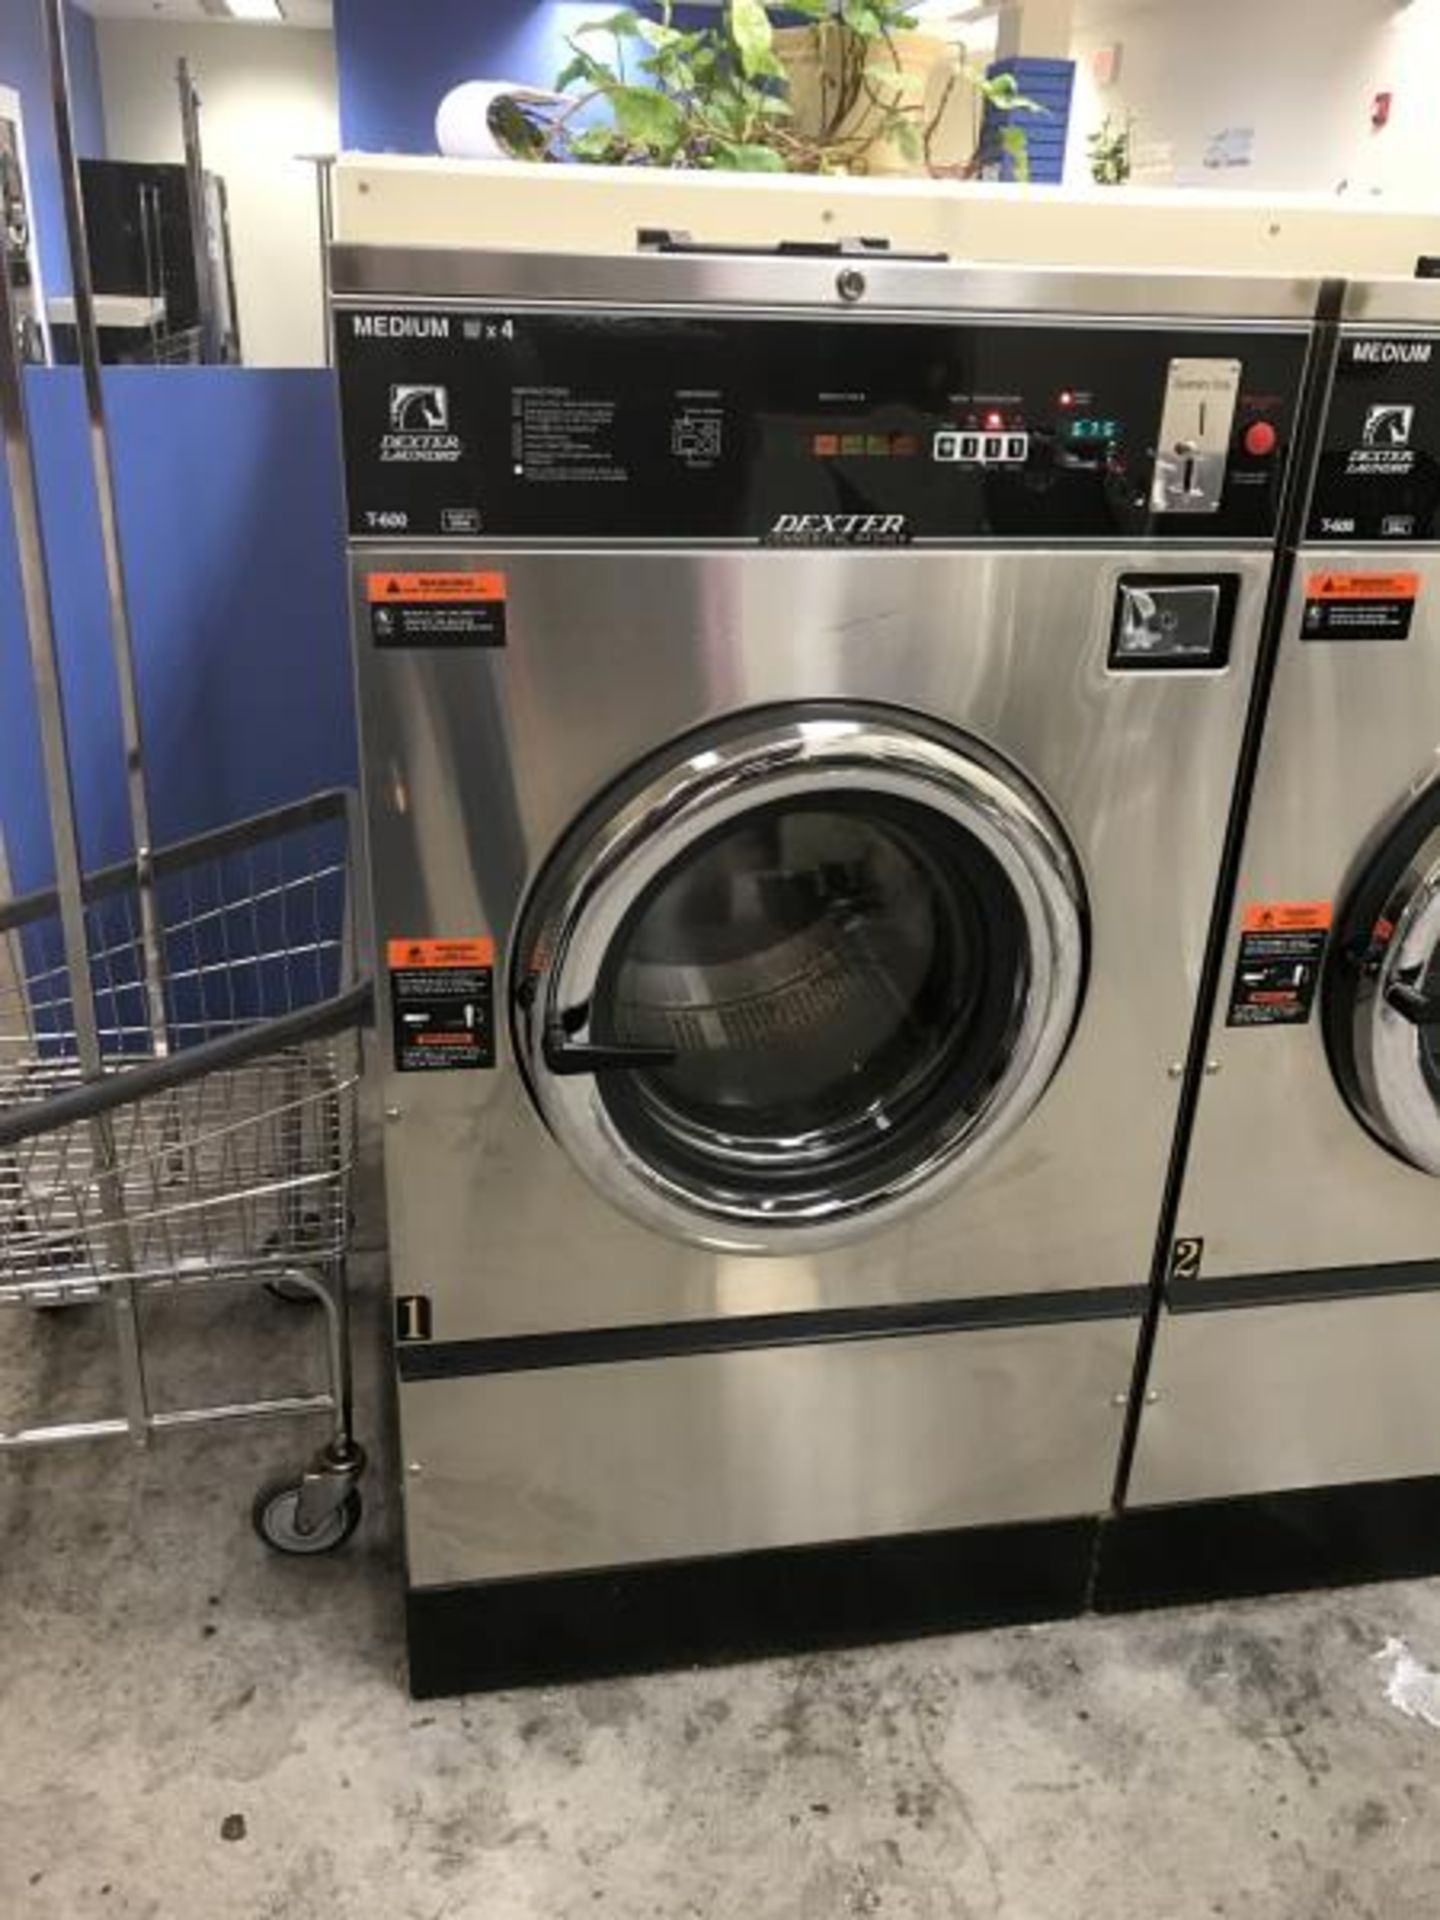 Dexter Commercial Washing Machine, Medium x 4, 40 Lbs., Model: T-600 / WCAD40KCX-12CN, SN: 531831